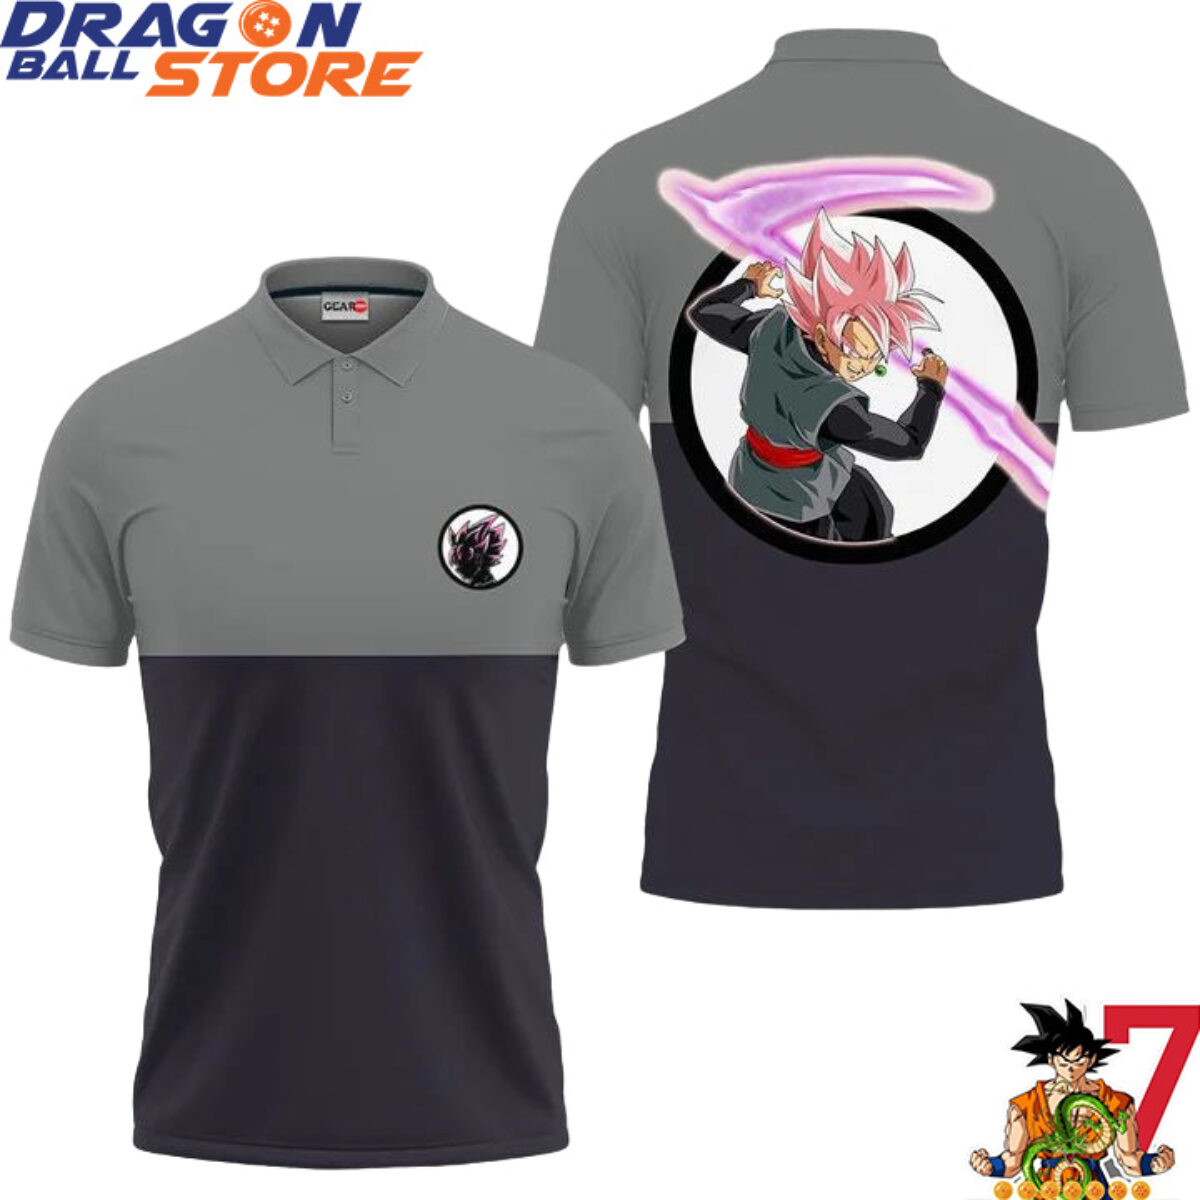 Dragon Ball T-shirts - Goku Black Potara DBZ store » Dragon Ball Store